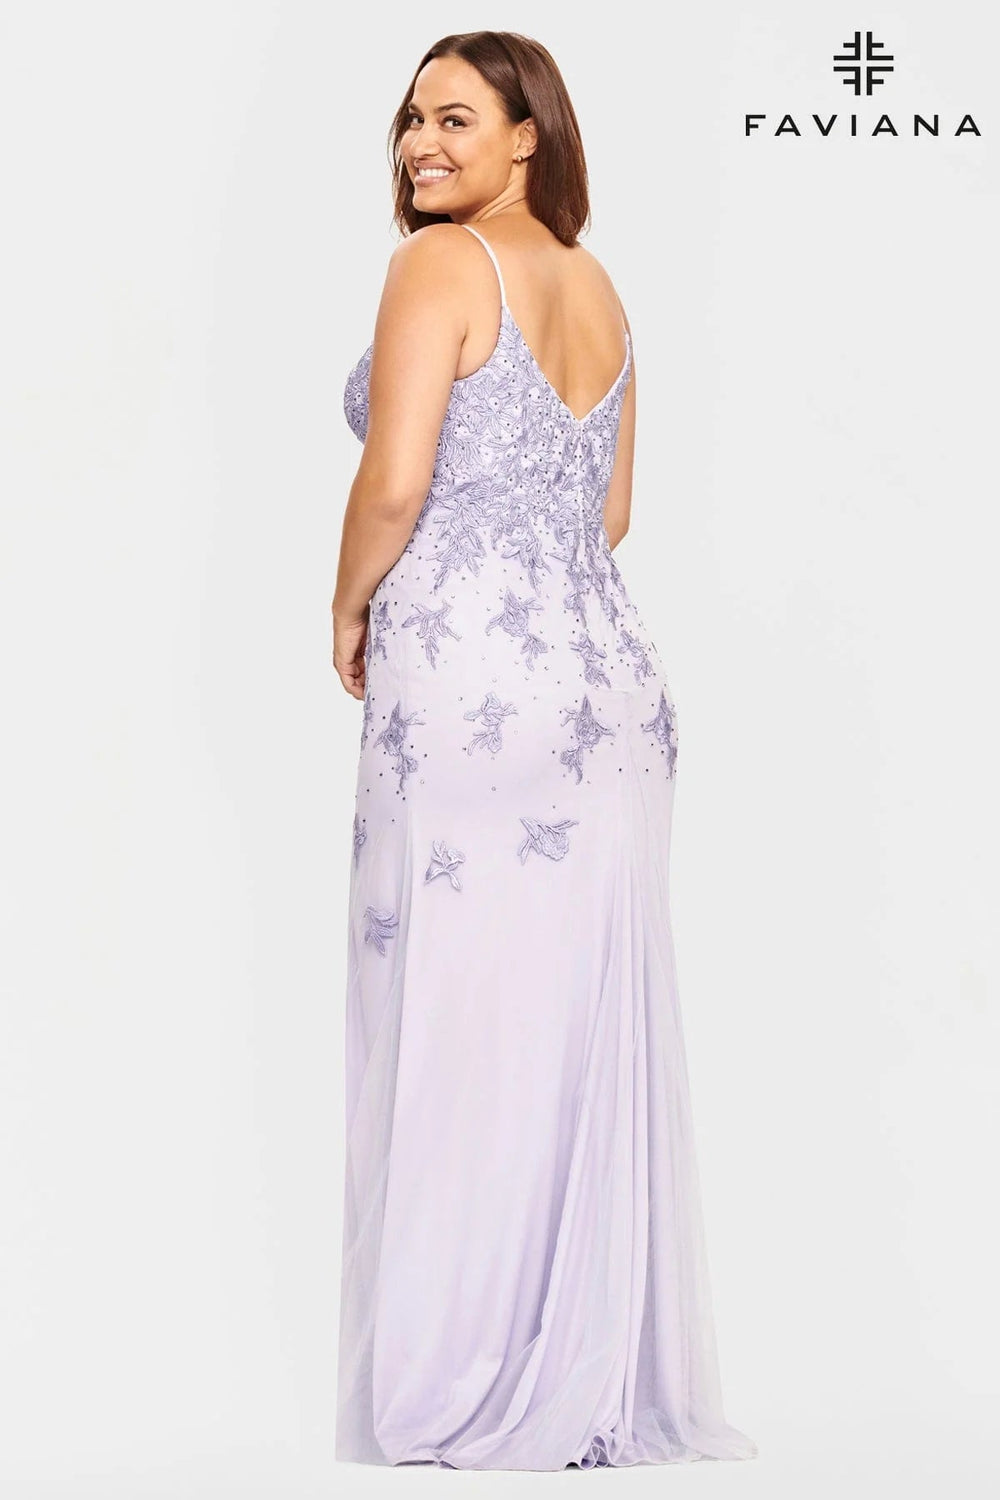 Faviana Evening Gown Copy of Plus Size FAVIANA 9535 Dress